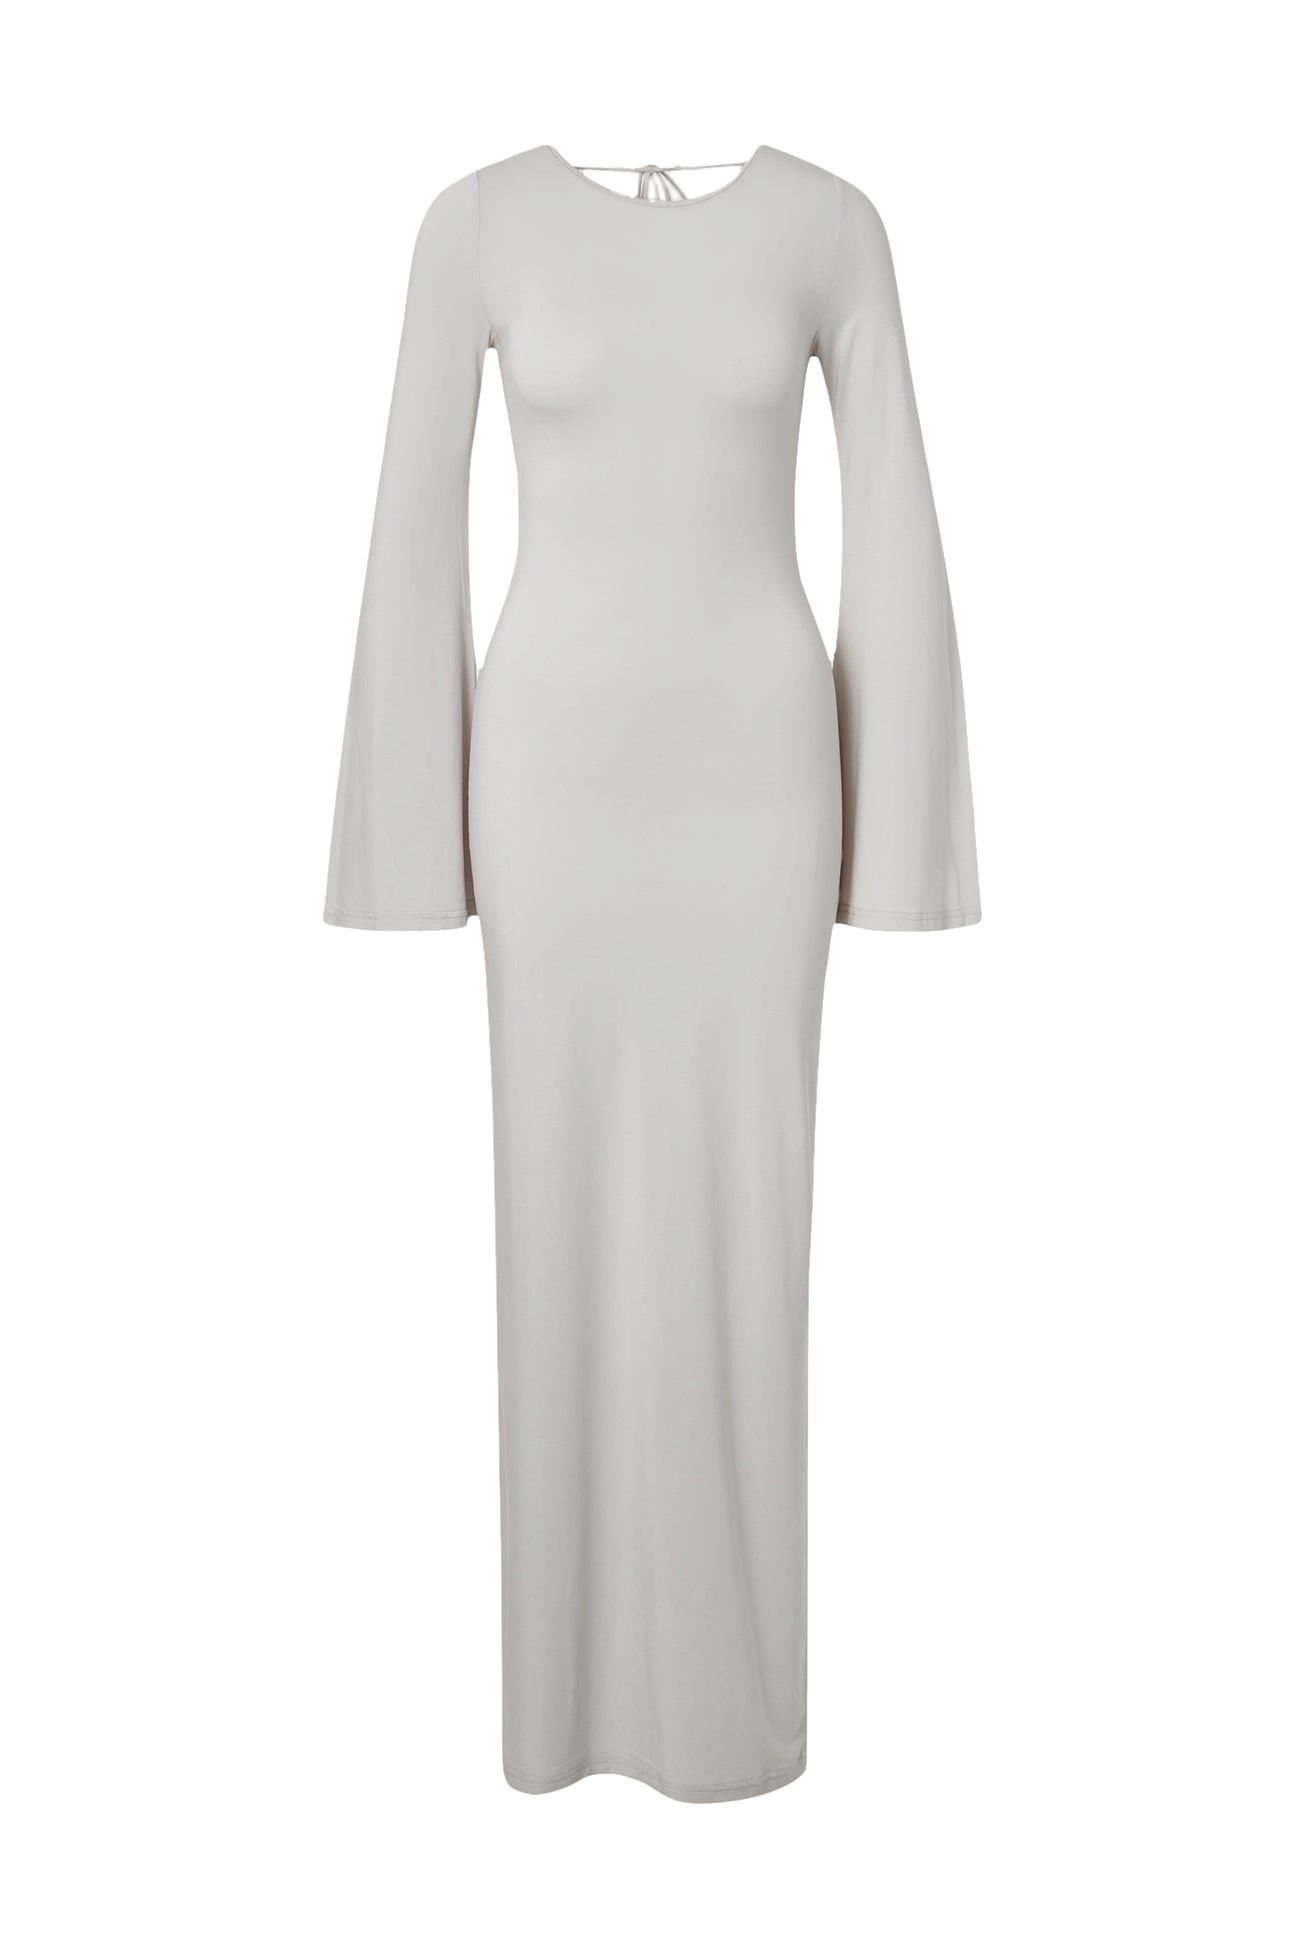 Nomino Poppy Dress In White